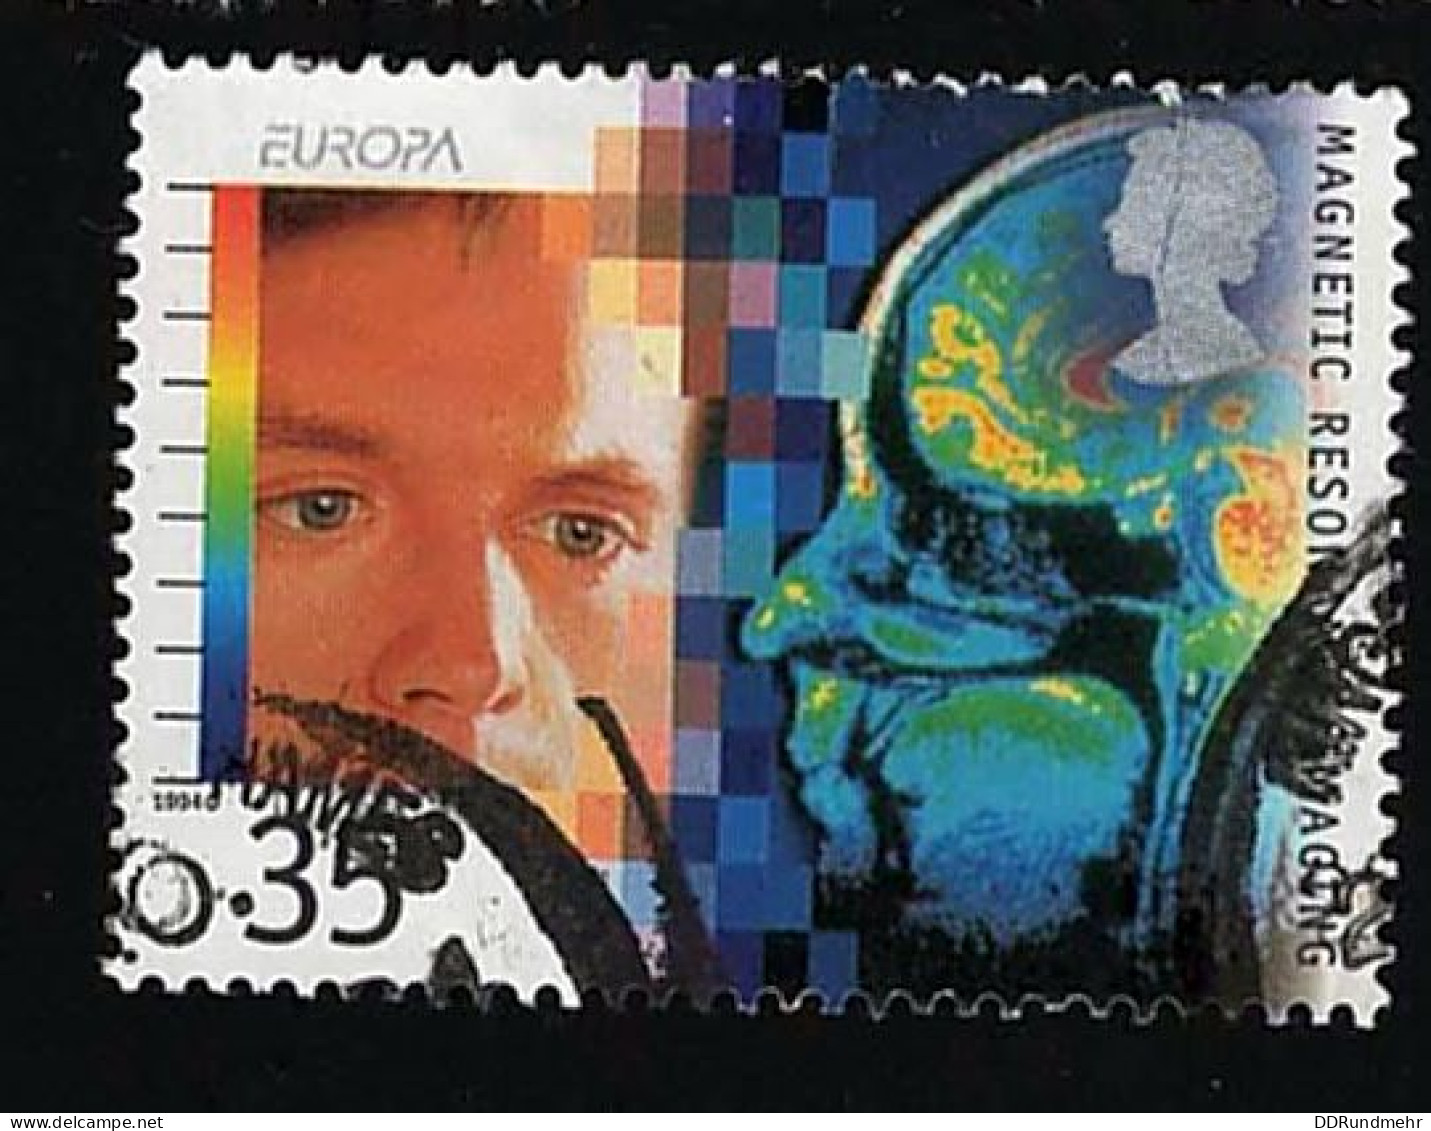 1994 Europa  Michel GB 1537 Stamp Number GB 1579 Yvert Et Tellier GB 1782 Stanley Gibbons GB 1841 AFA GB 1700  Used - Gebraucht